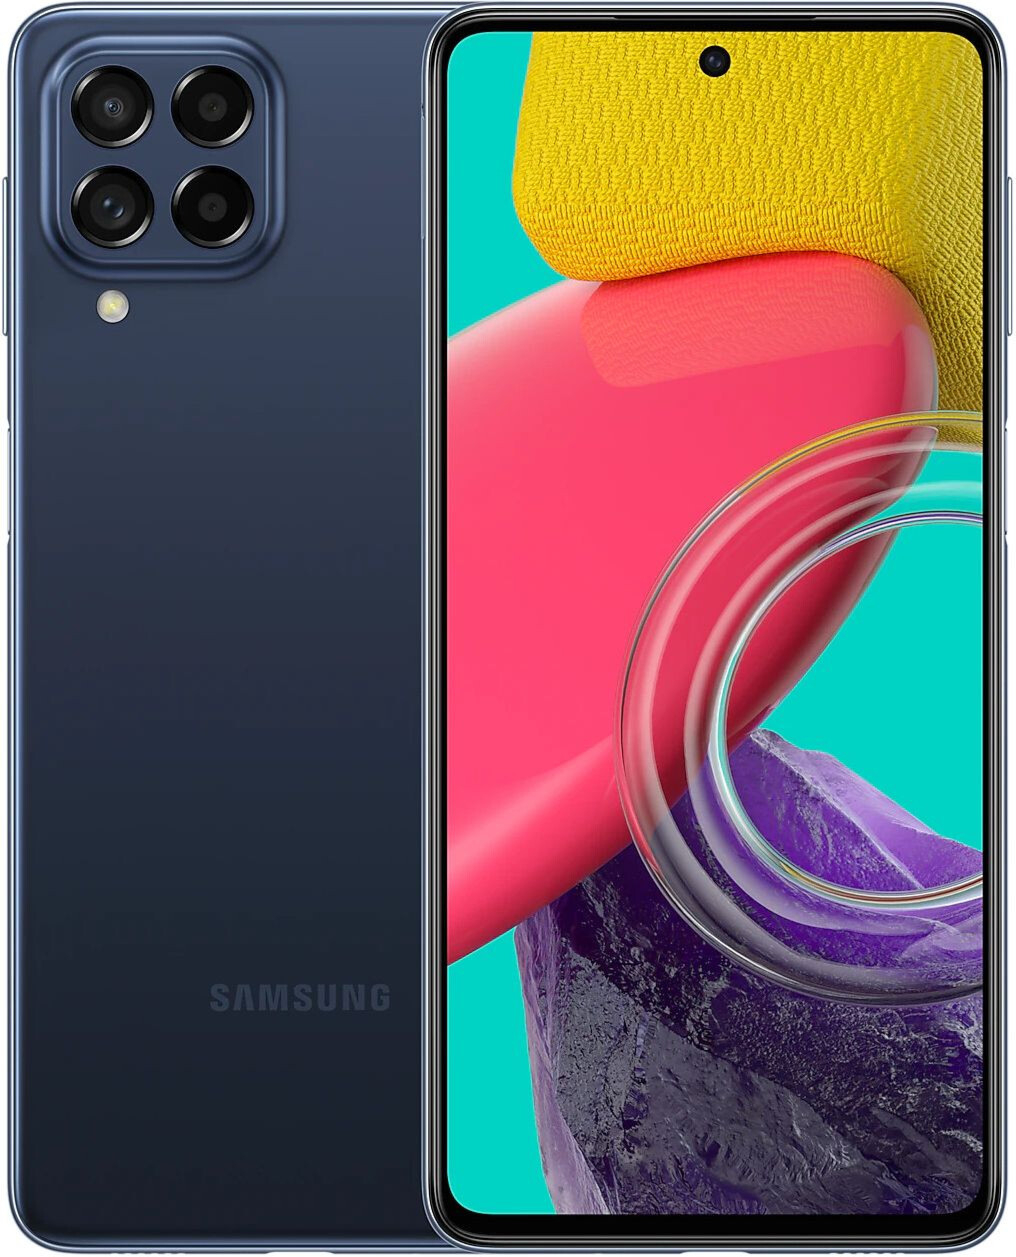 Смартфон Samsung Galaxy M53 5G 8/256GB Global Blue (Синий)